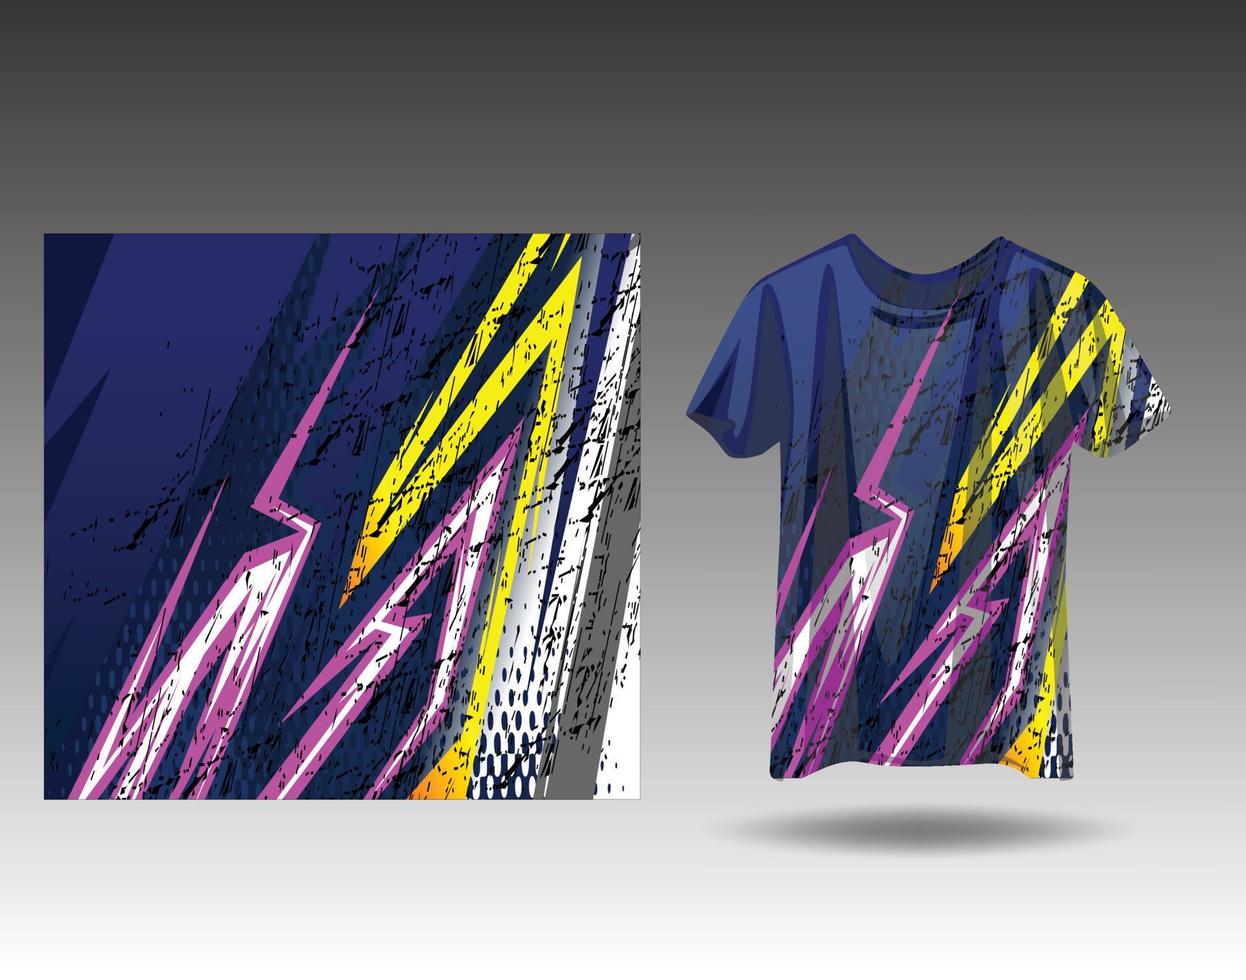 t-shirt sport grunge achtergrond voor extreem Jersey team racing wielersport Amerikaans voetbal gaming backdrop behang vector